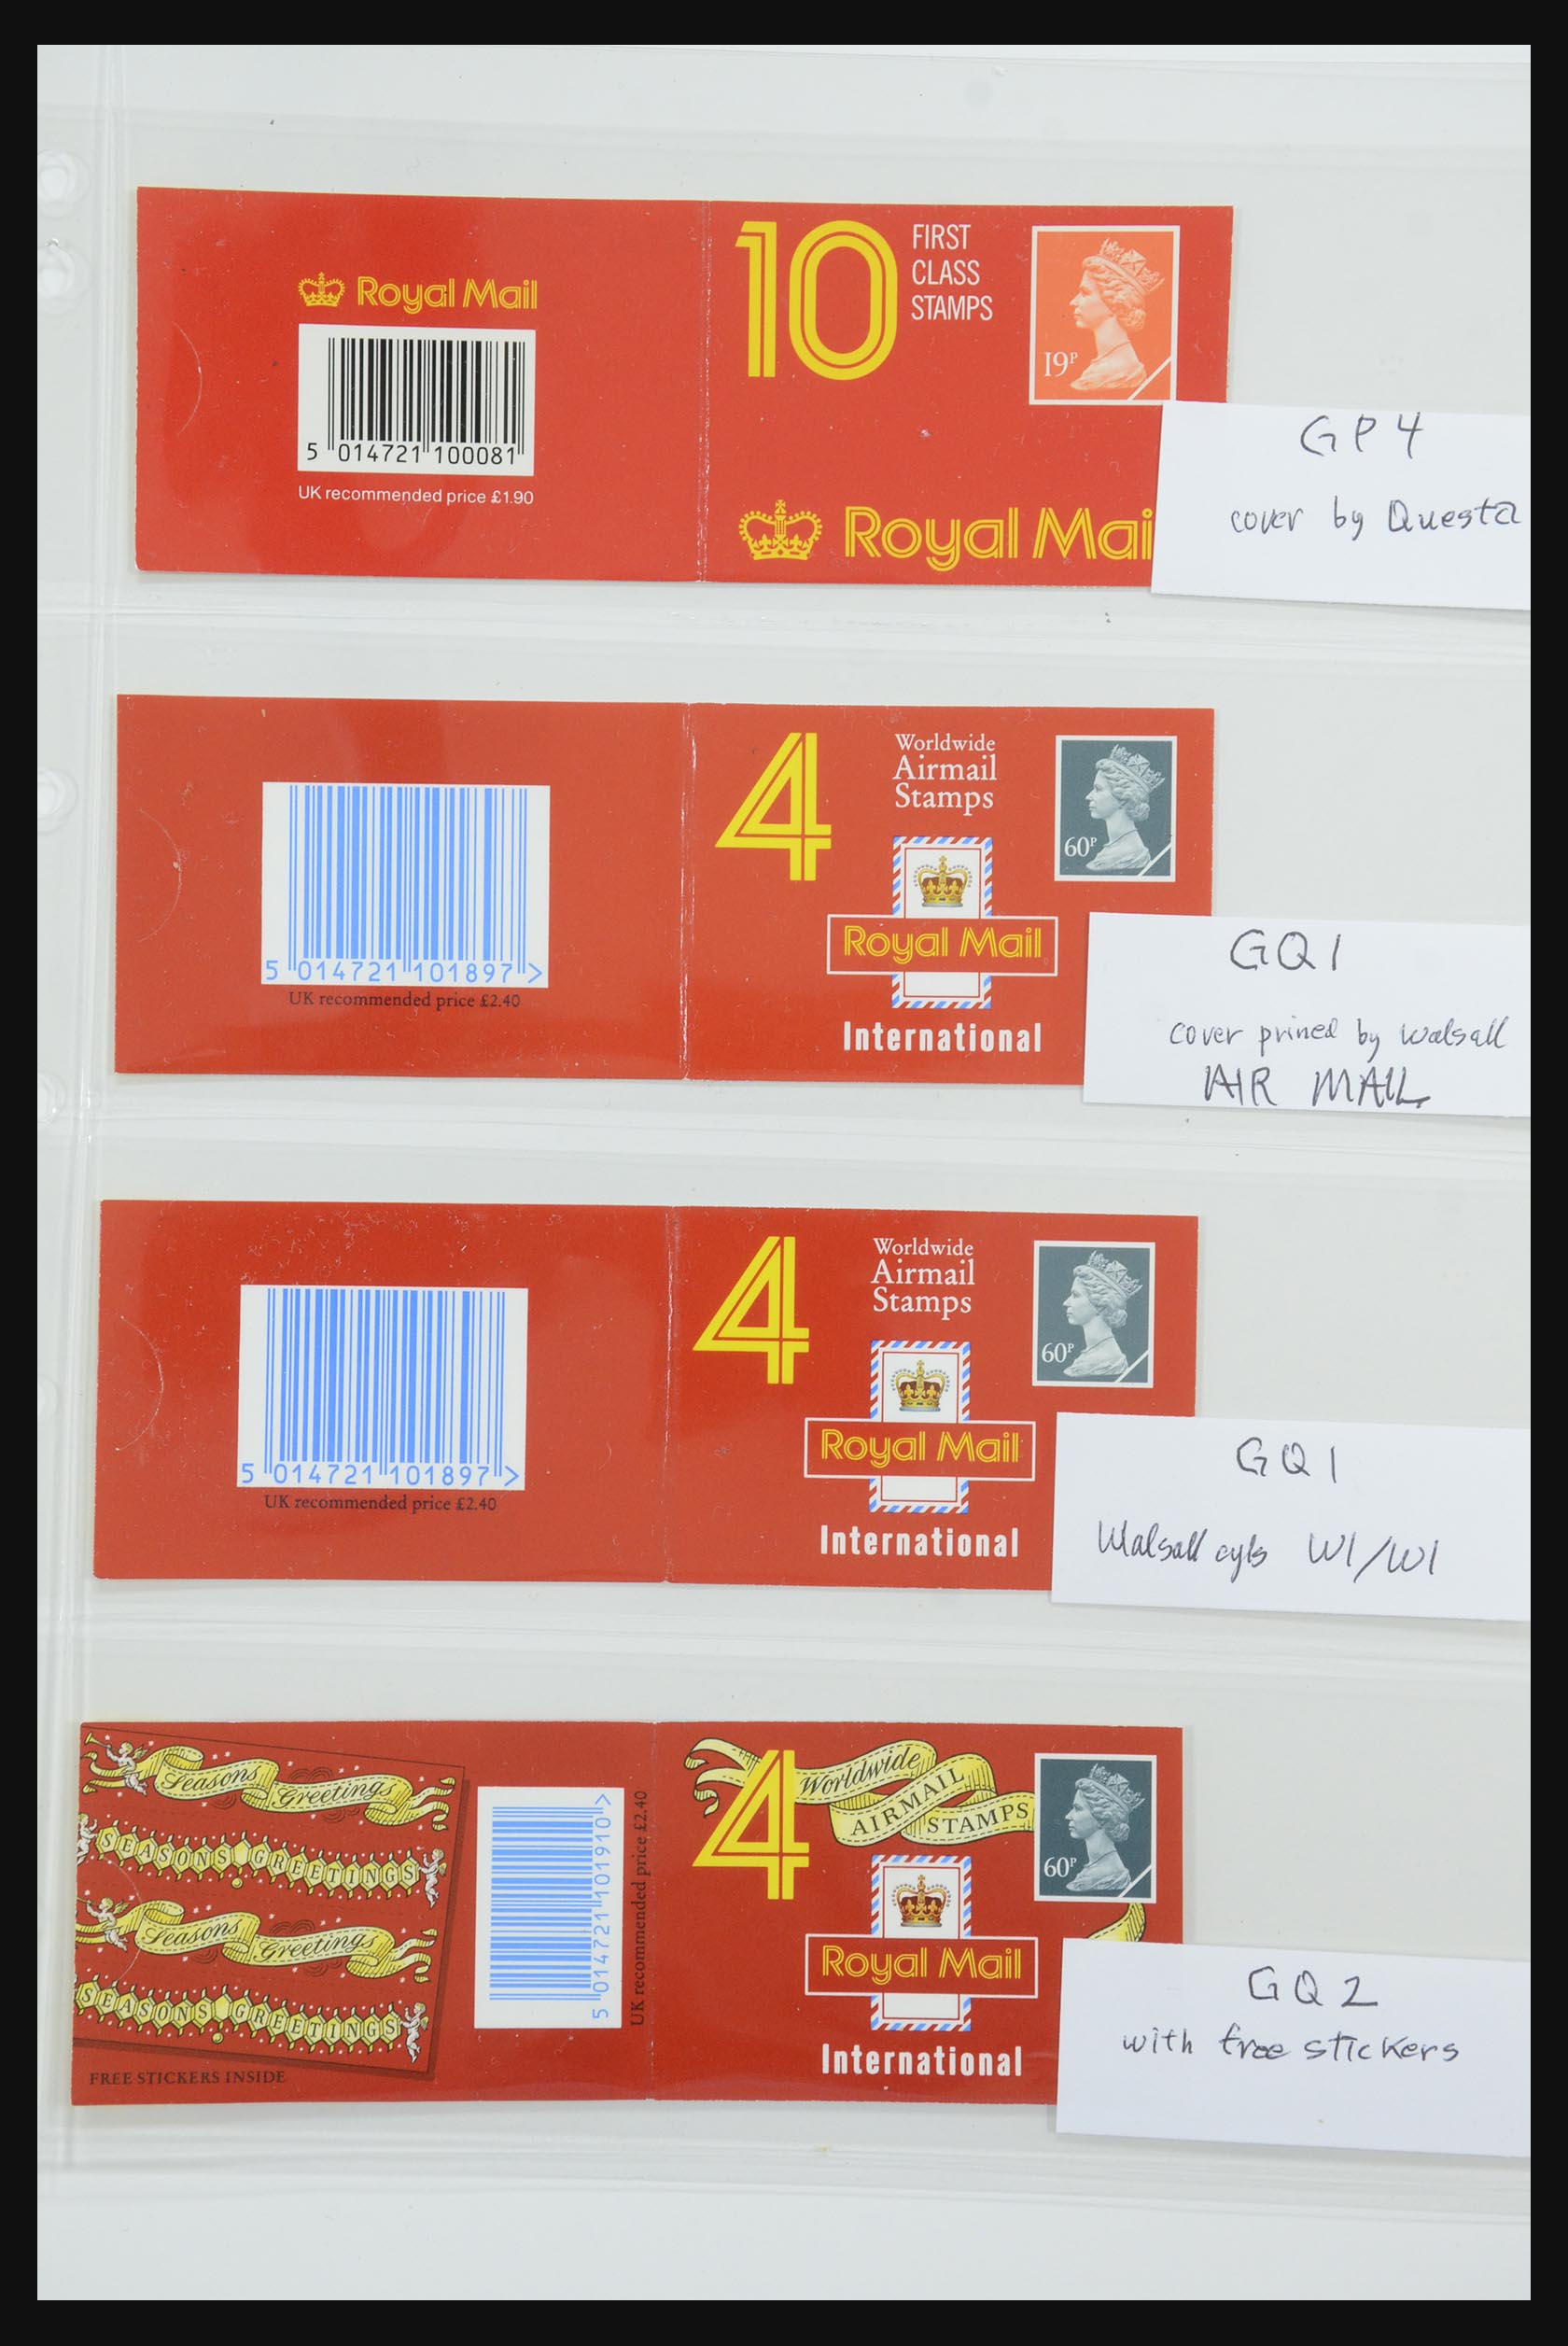 31959 075 - 31959 Great Britain stampbooklets 1987-2016!!